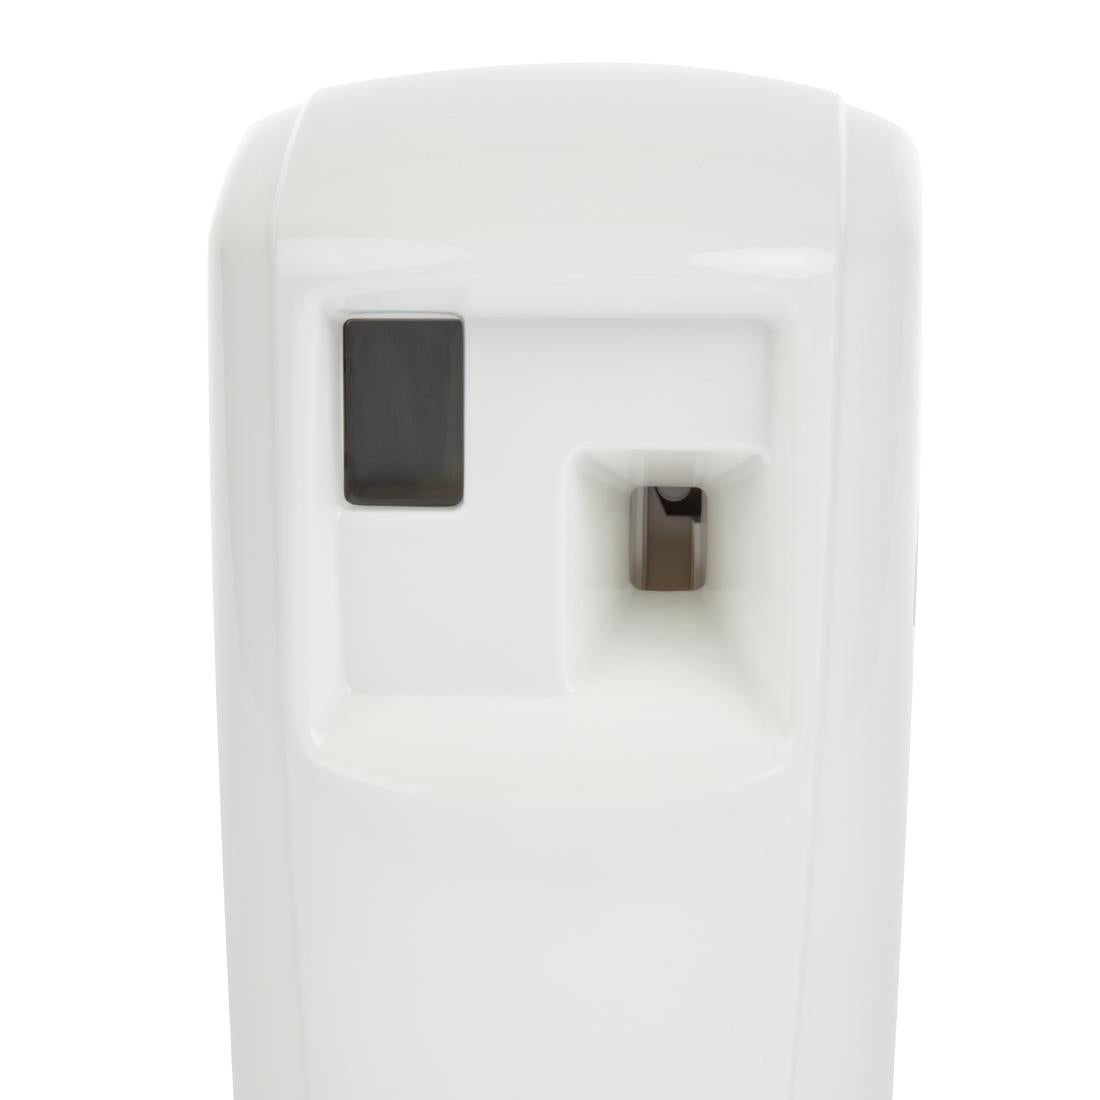 GH060 Rubbermaid Microburst Automatic Air Freshener Dispenser